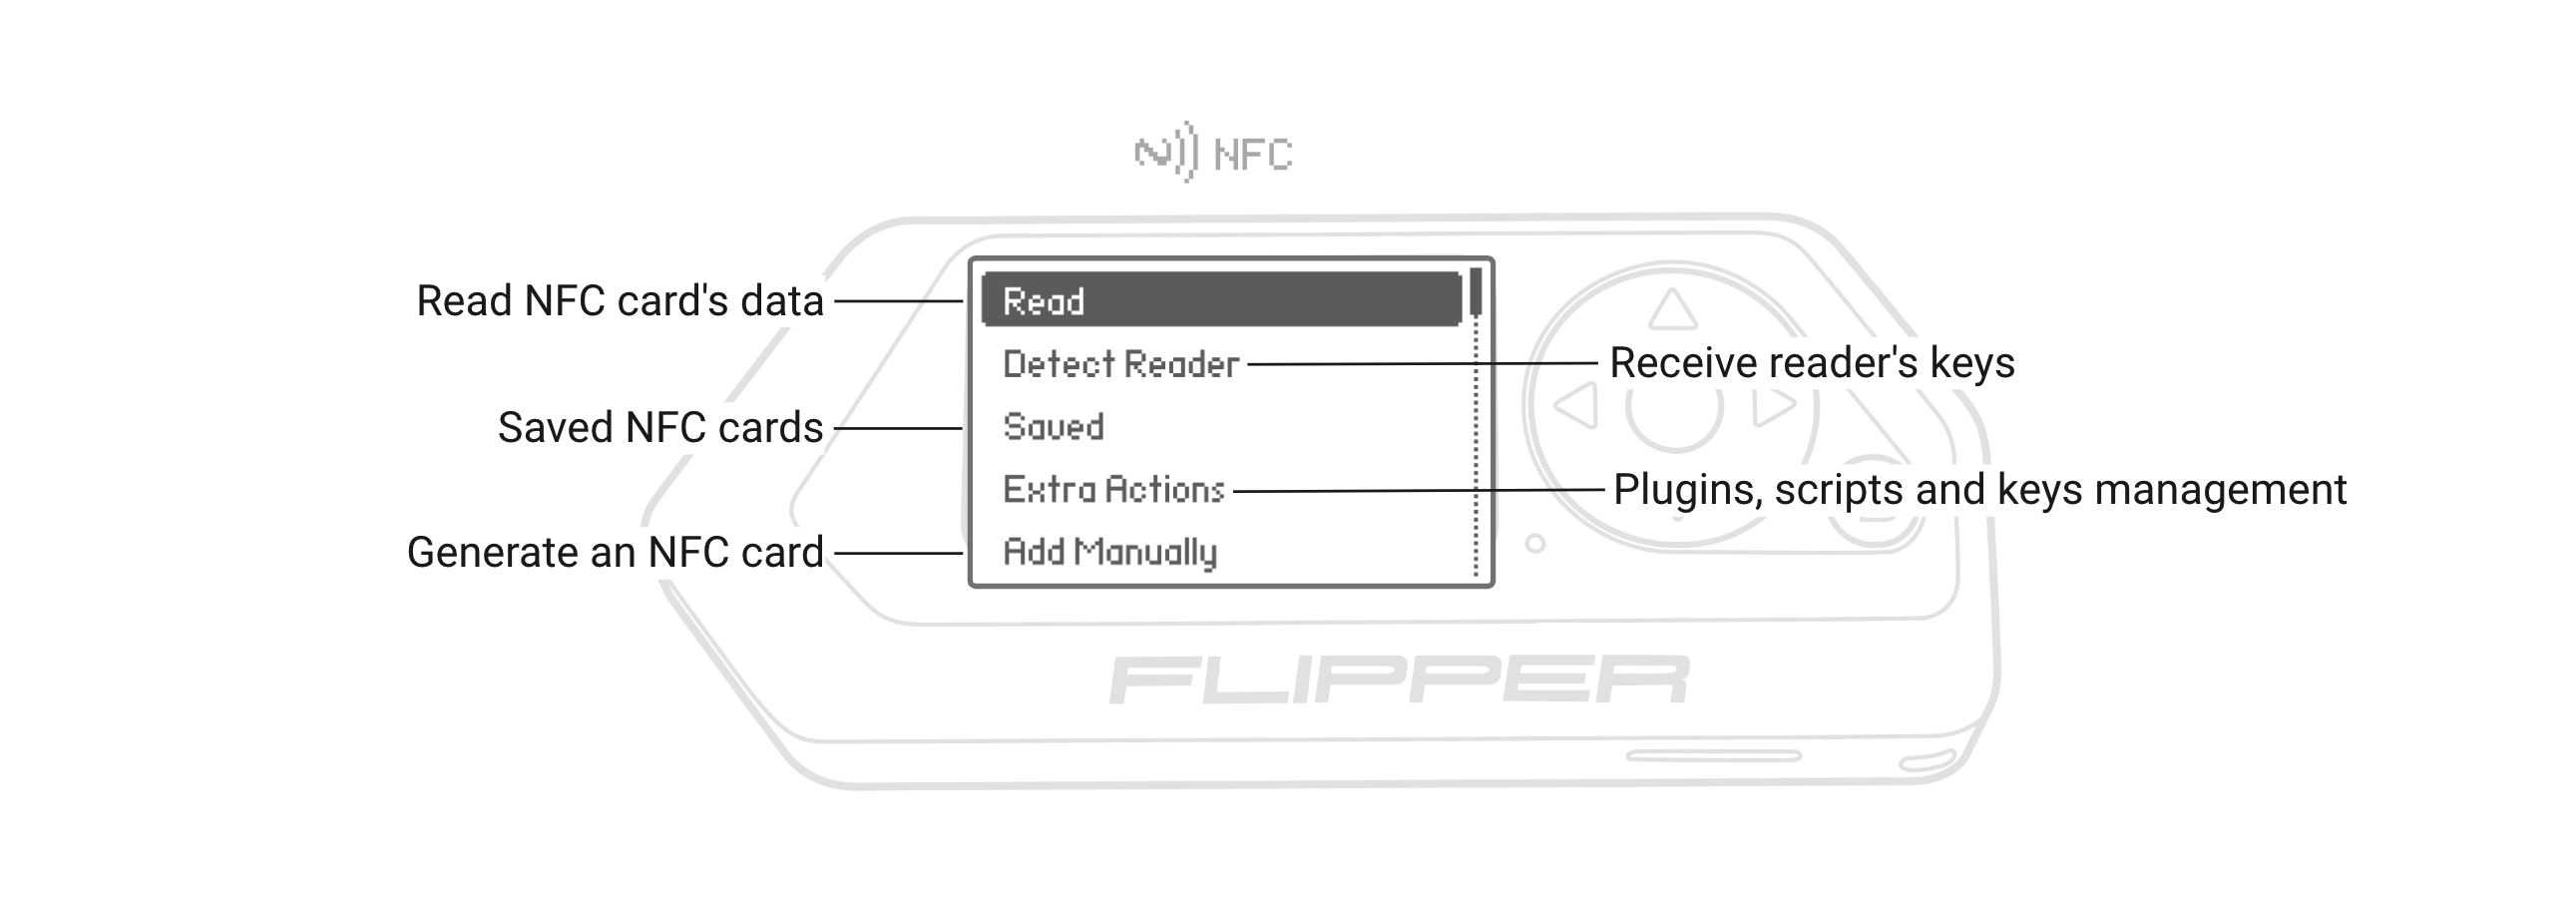 NFC application menu